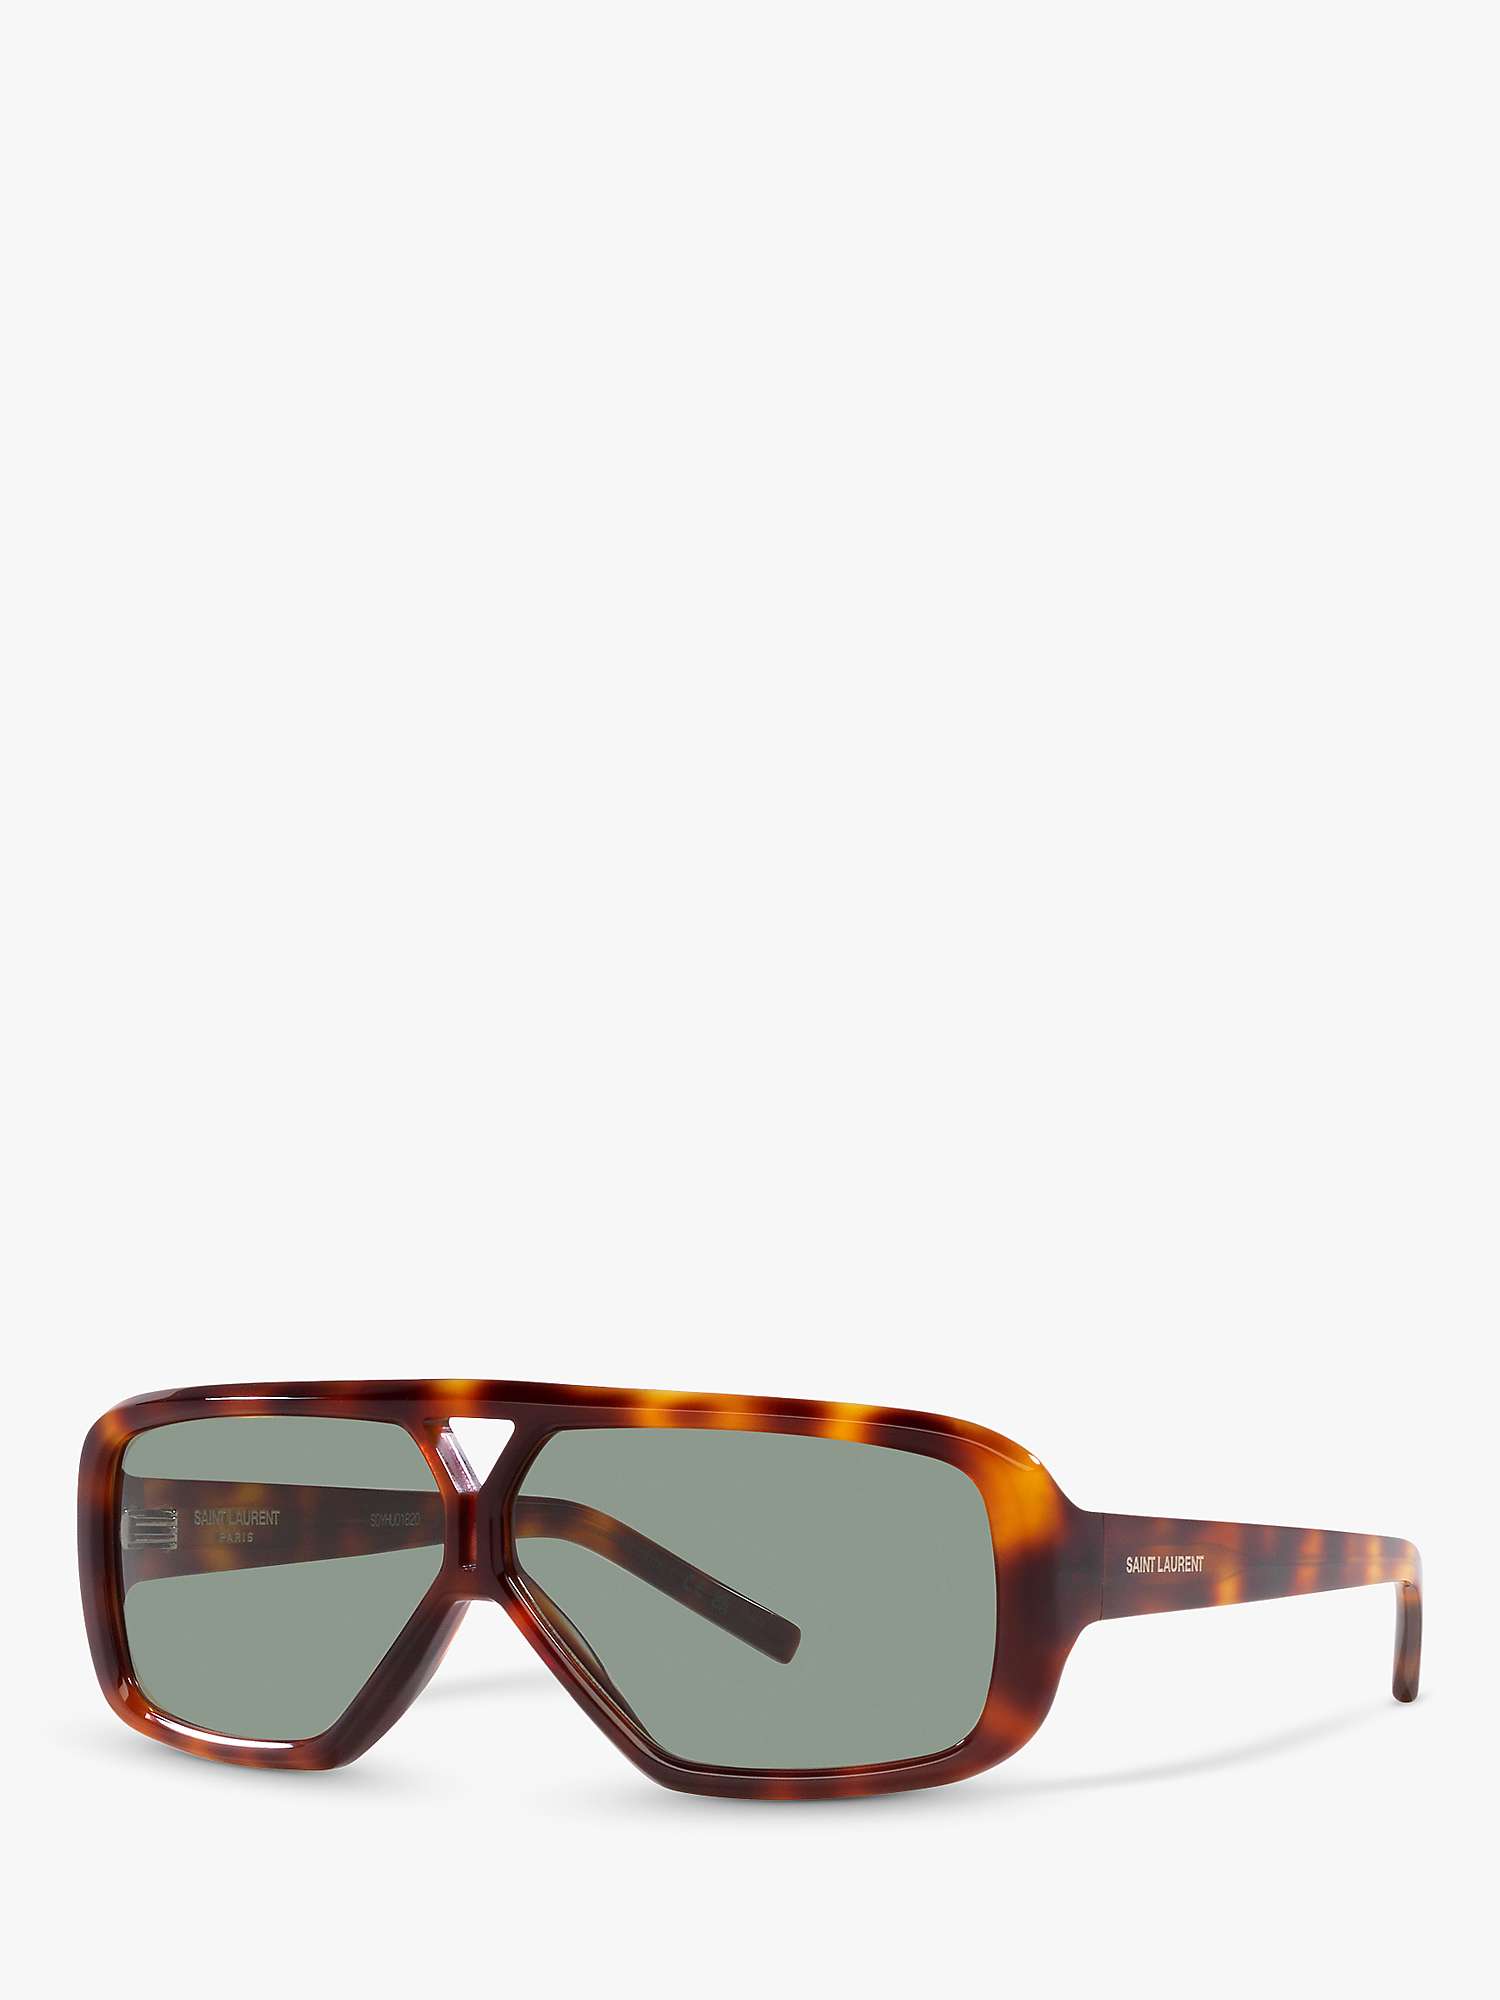 Buy Yves Saint Laurent YS000434 Women's Wrap Sunglasses, Havana/Green Online at johnlewis.com